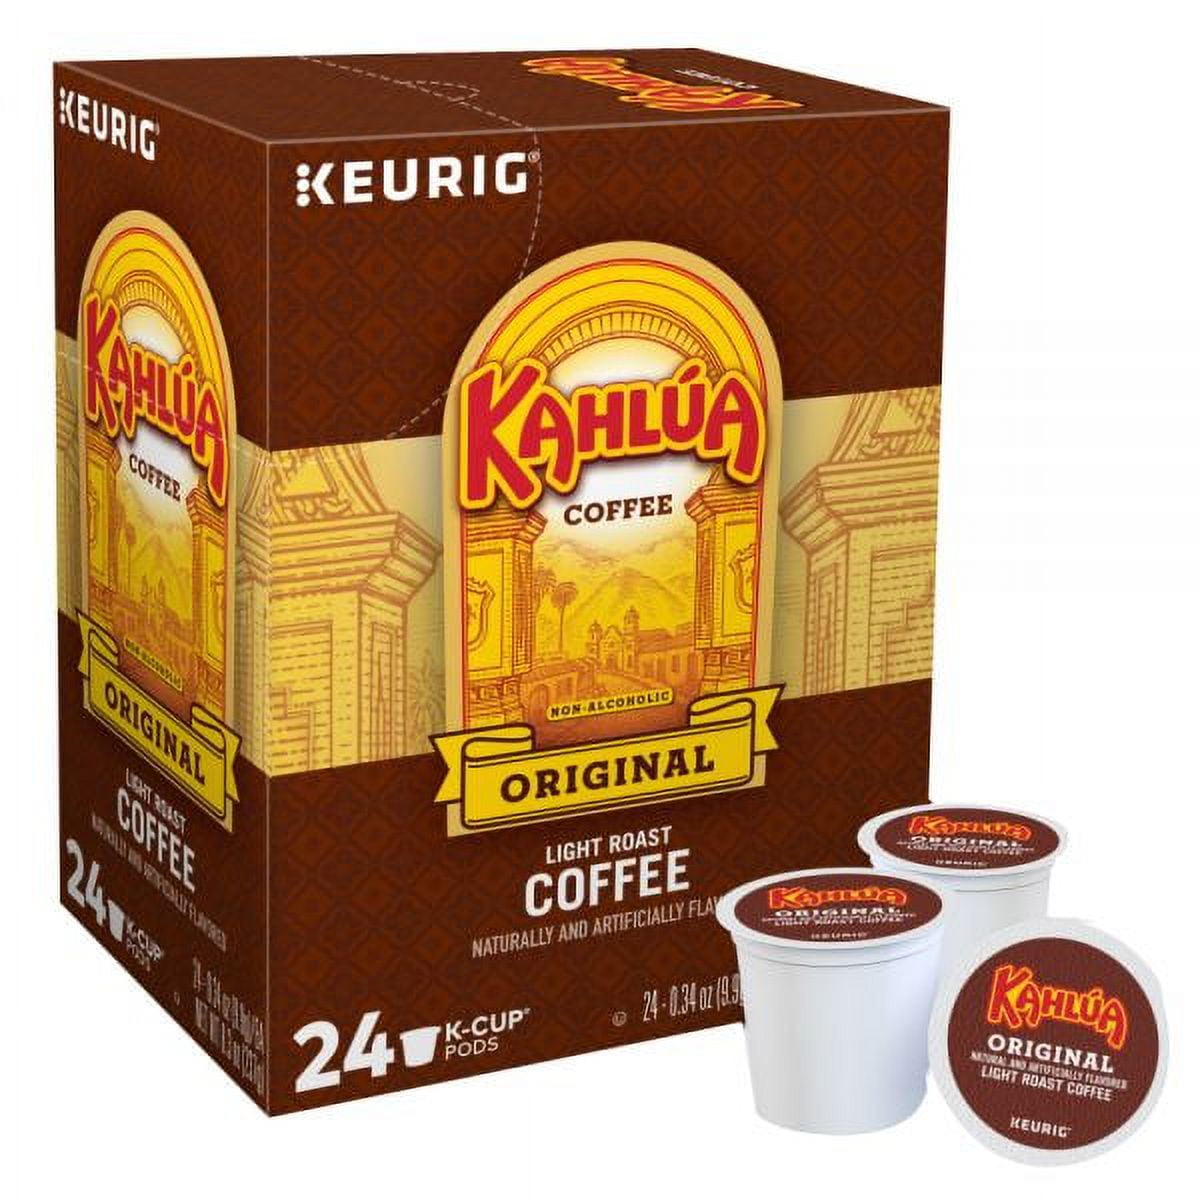 Keurig Kahlua Single-Serve Coffee K-Cup, Arabica, Carton Of 24